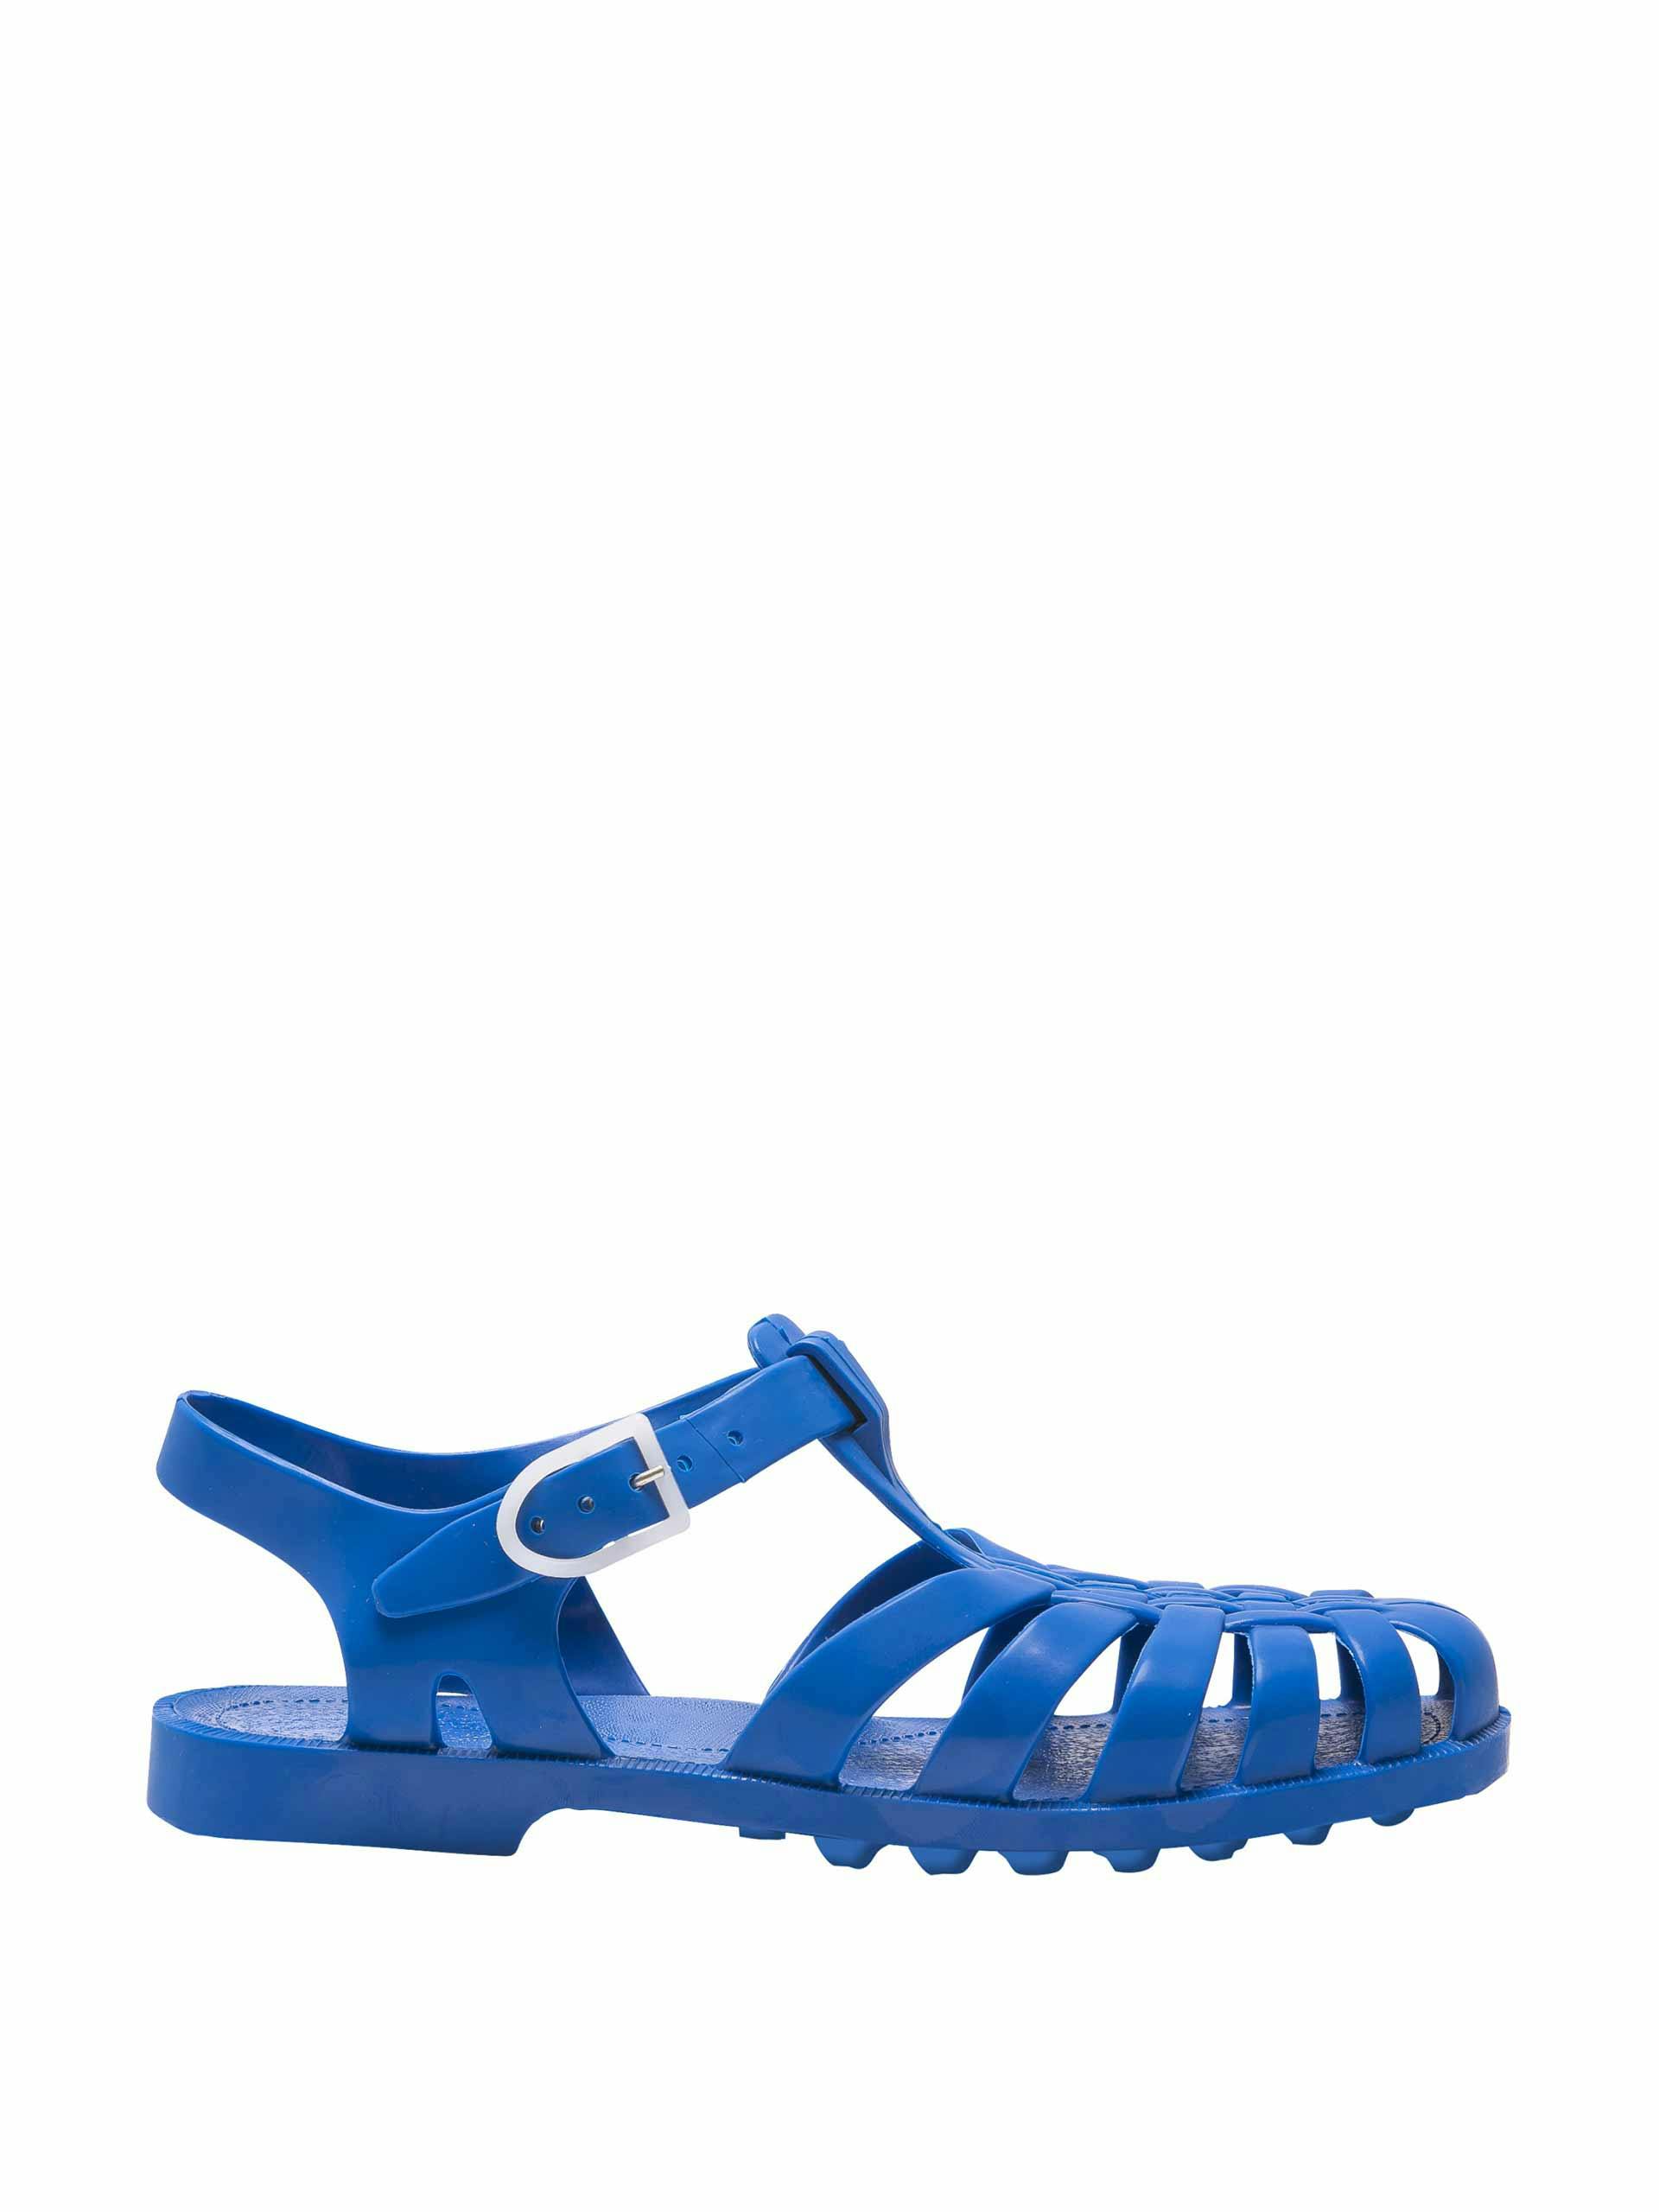 Royal Blue sandals